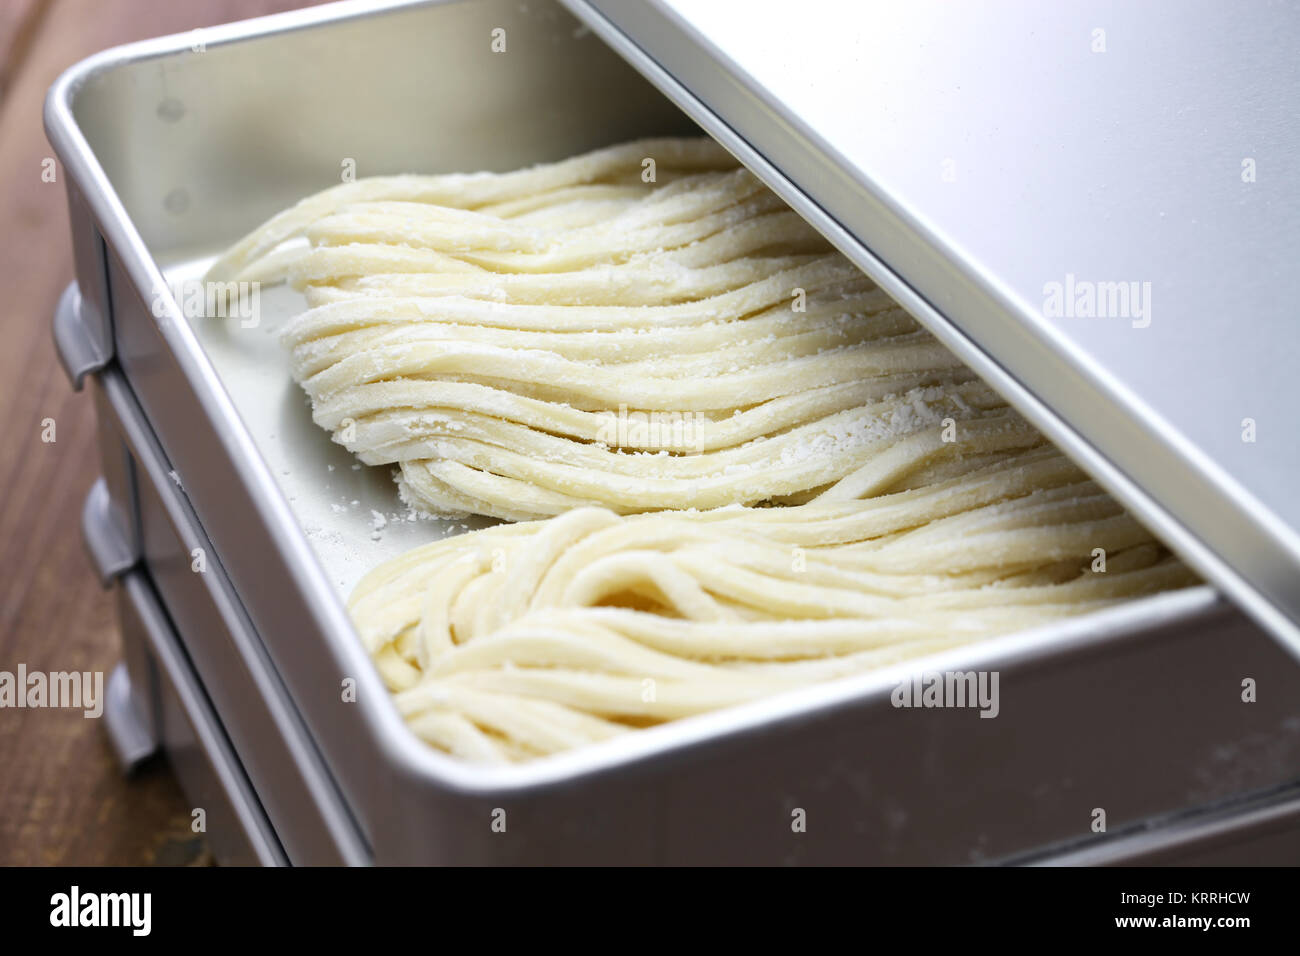 sanuki udon, japanese wheat noodles Stock Photo